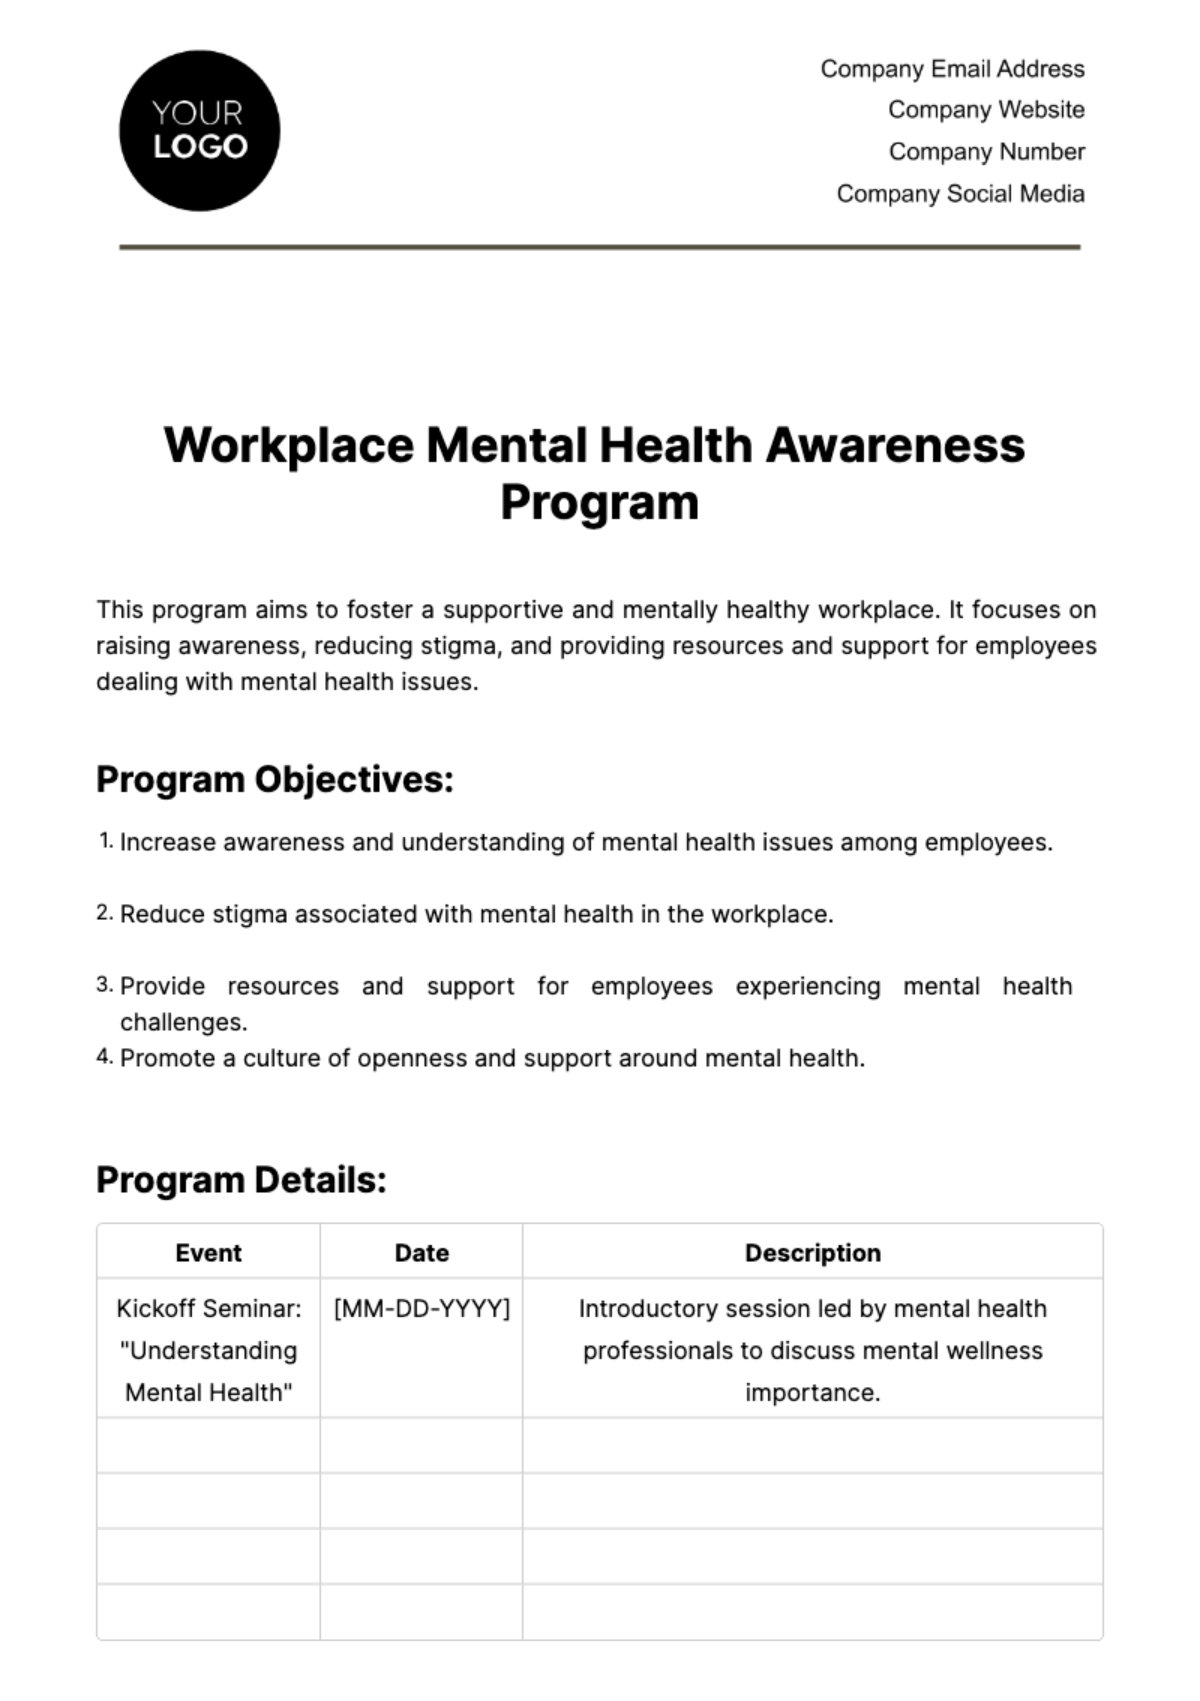 Workplace Mental Health Awareness Program Template